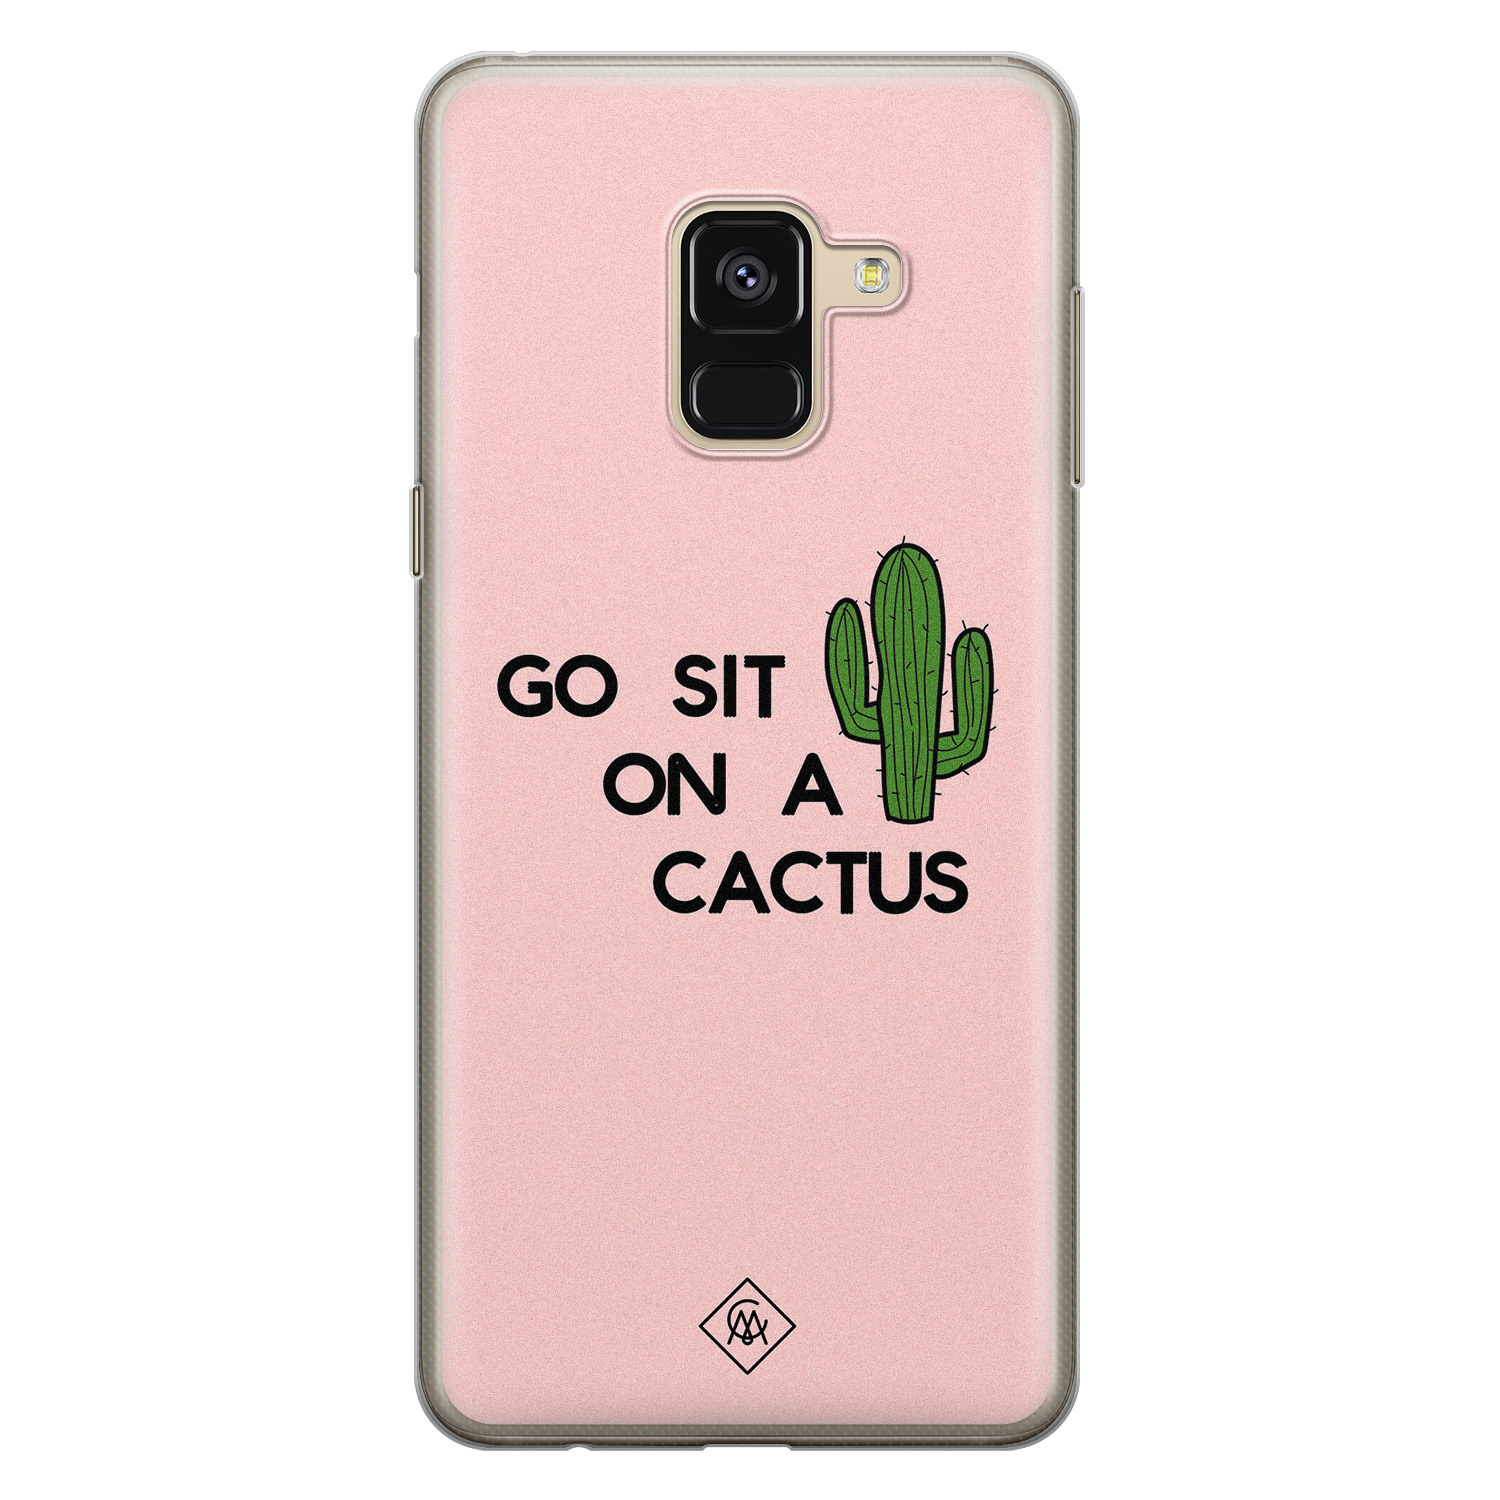 Moedig Buitenlander Geweldige eik Samsung Galaxy A8 (2018) siliconen hoesje - Go sit on a cactus - Casimoda.nl